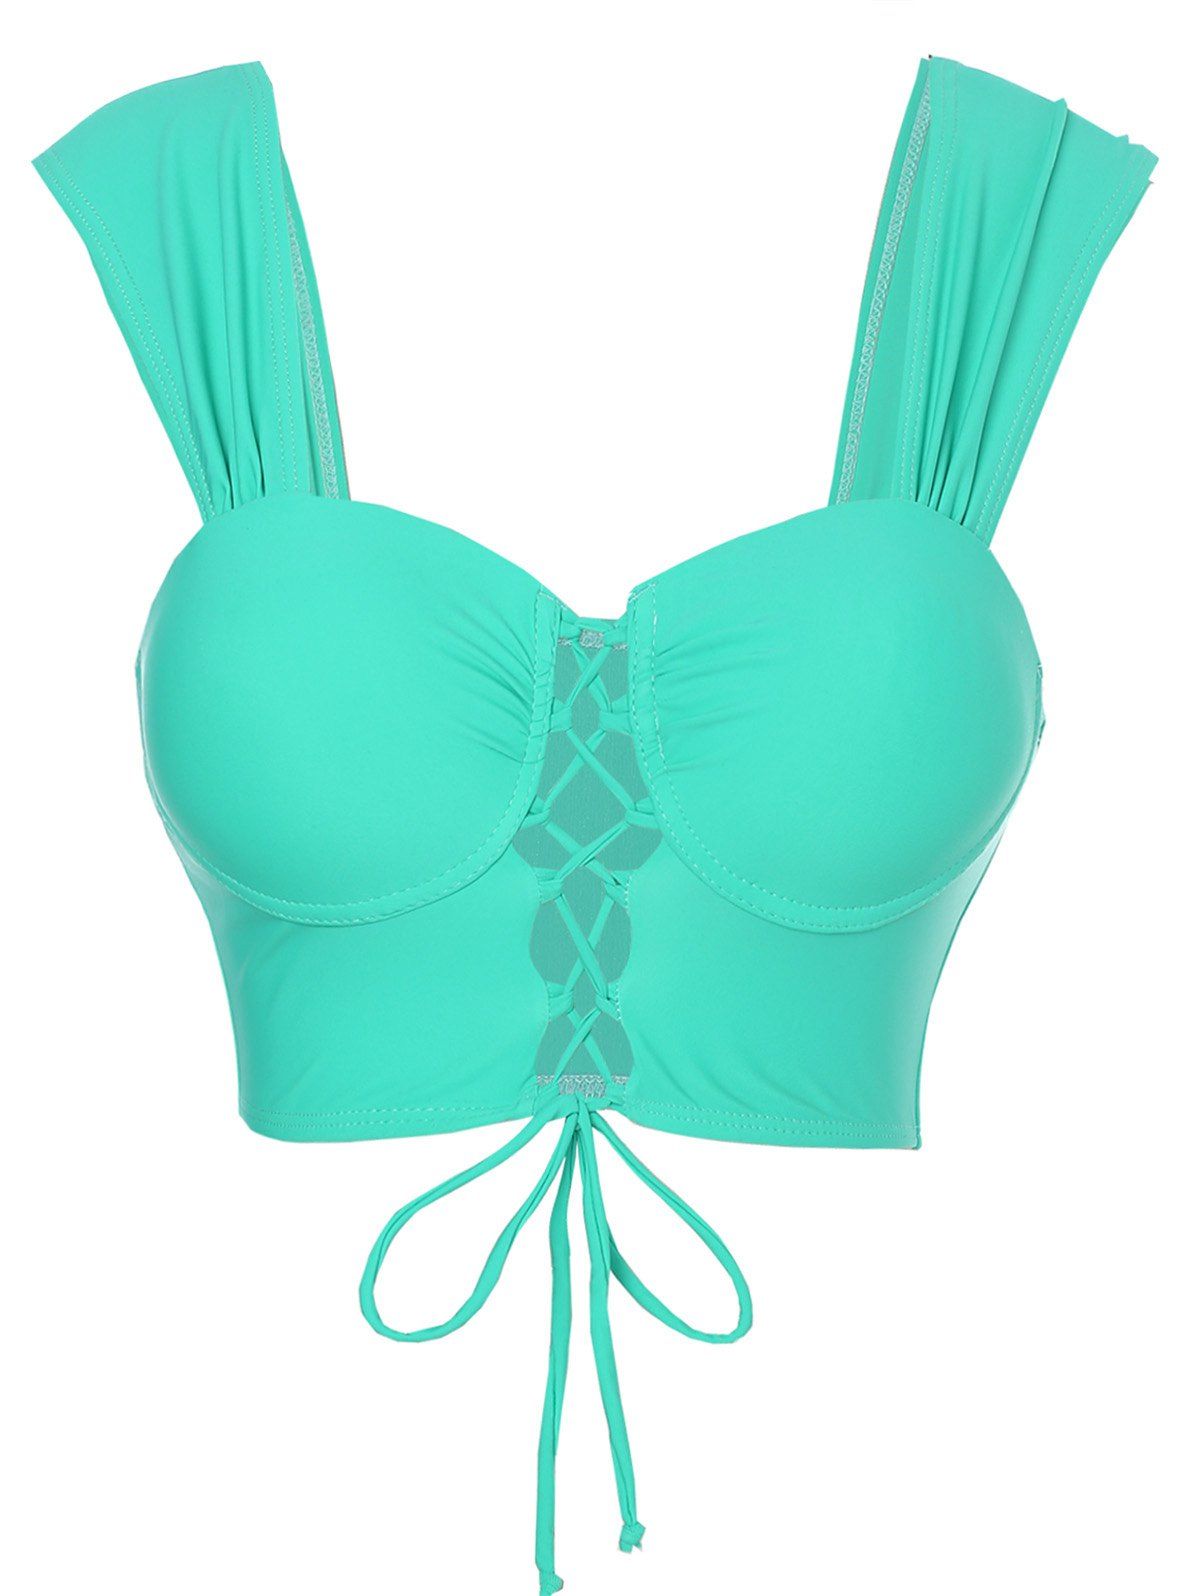 Bright Color Underwire Bikini Top Lace Up Cut Out Plain Swim Top - GREEN XL